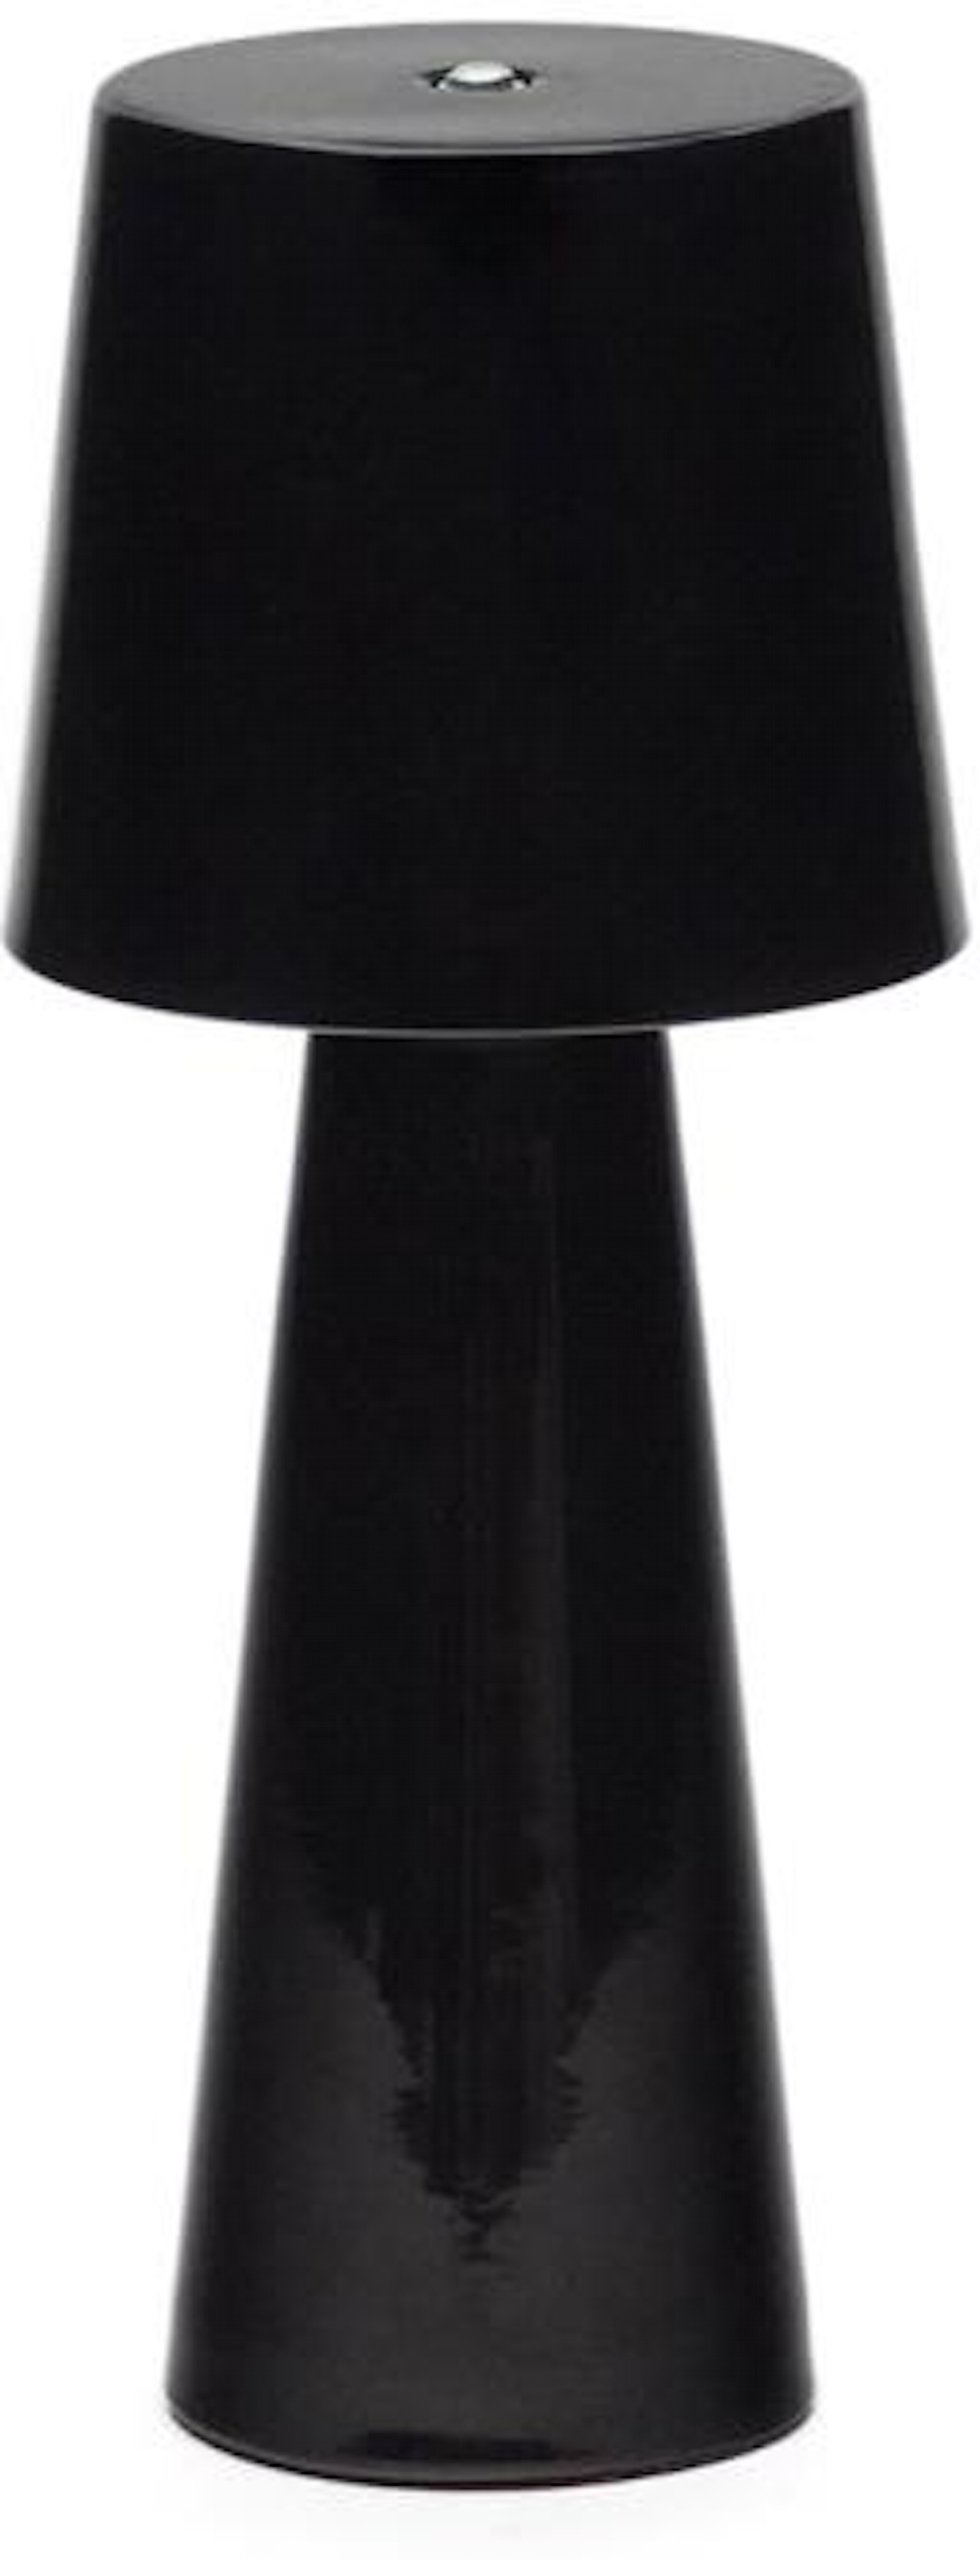 LAFORMA Arenys lille bordlampe med hvidmalet finish